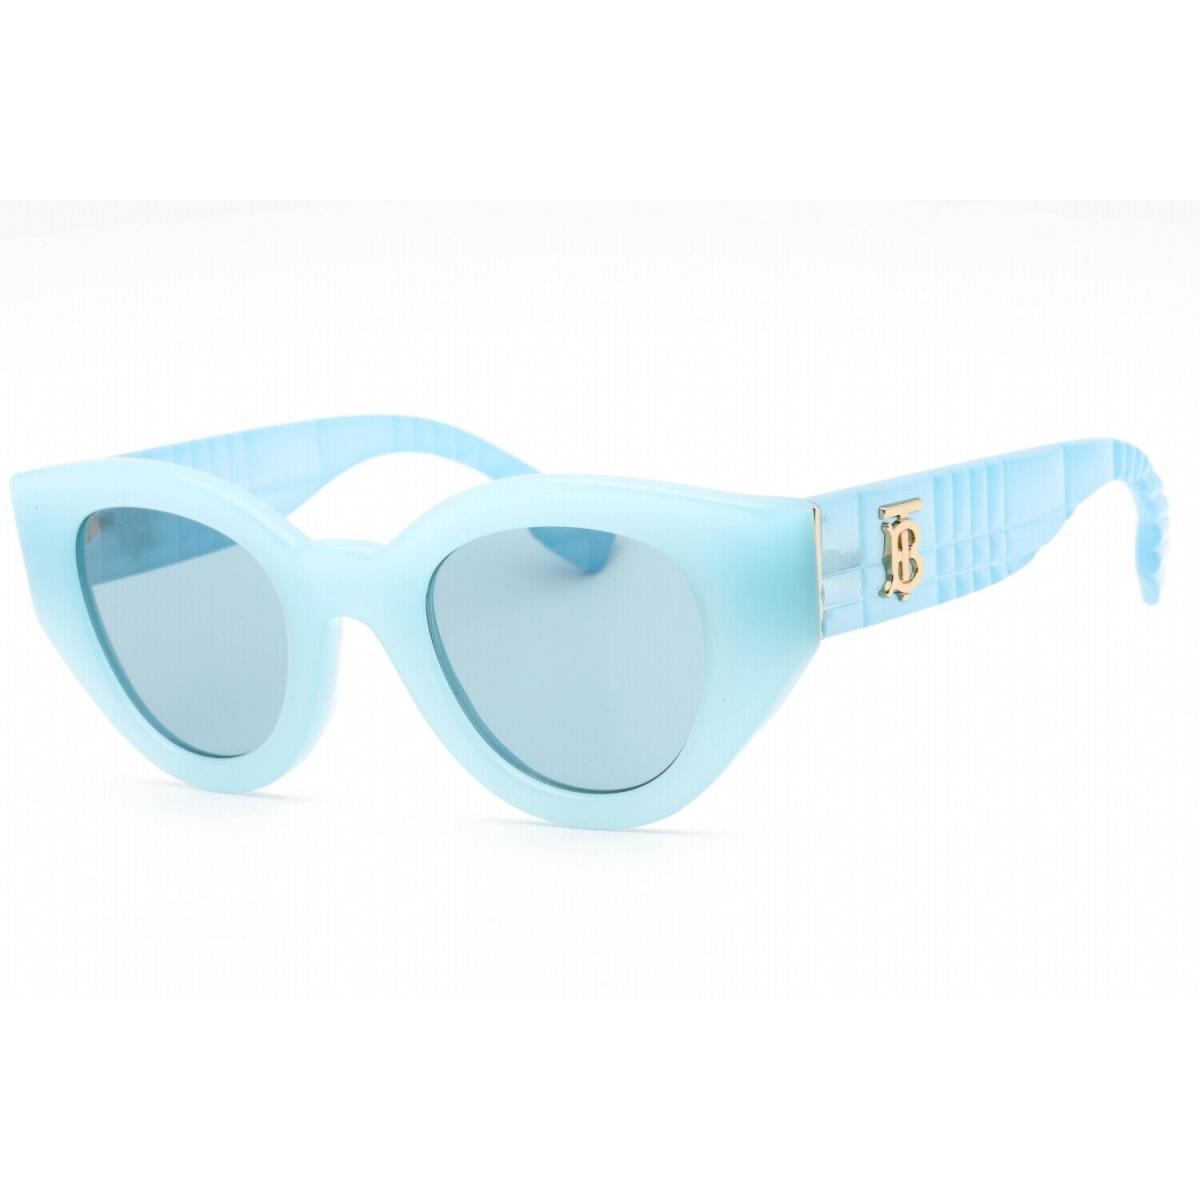 Burberry BE4390-408680-47 Sunglasses Size 47mm 140mm 25mm Azure Women - Frame: azure, Lens: azure